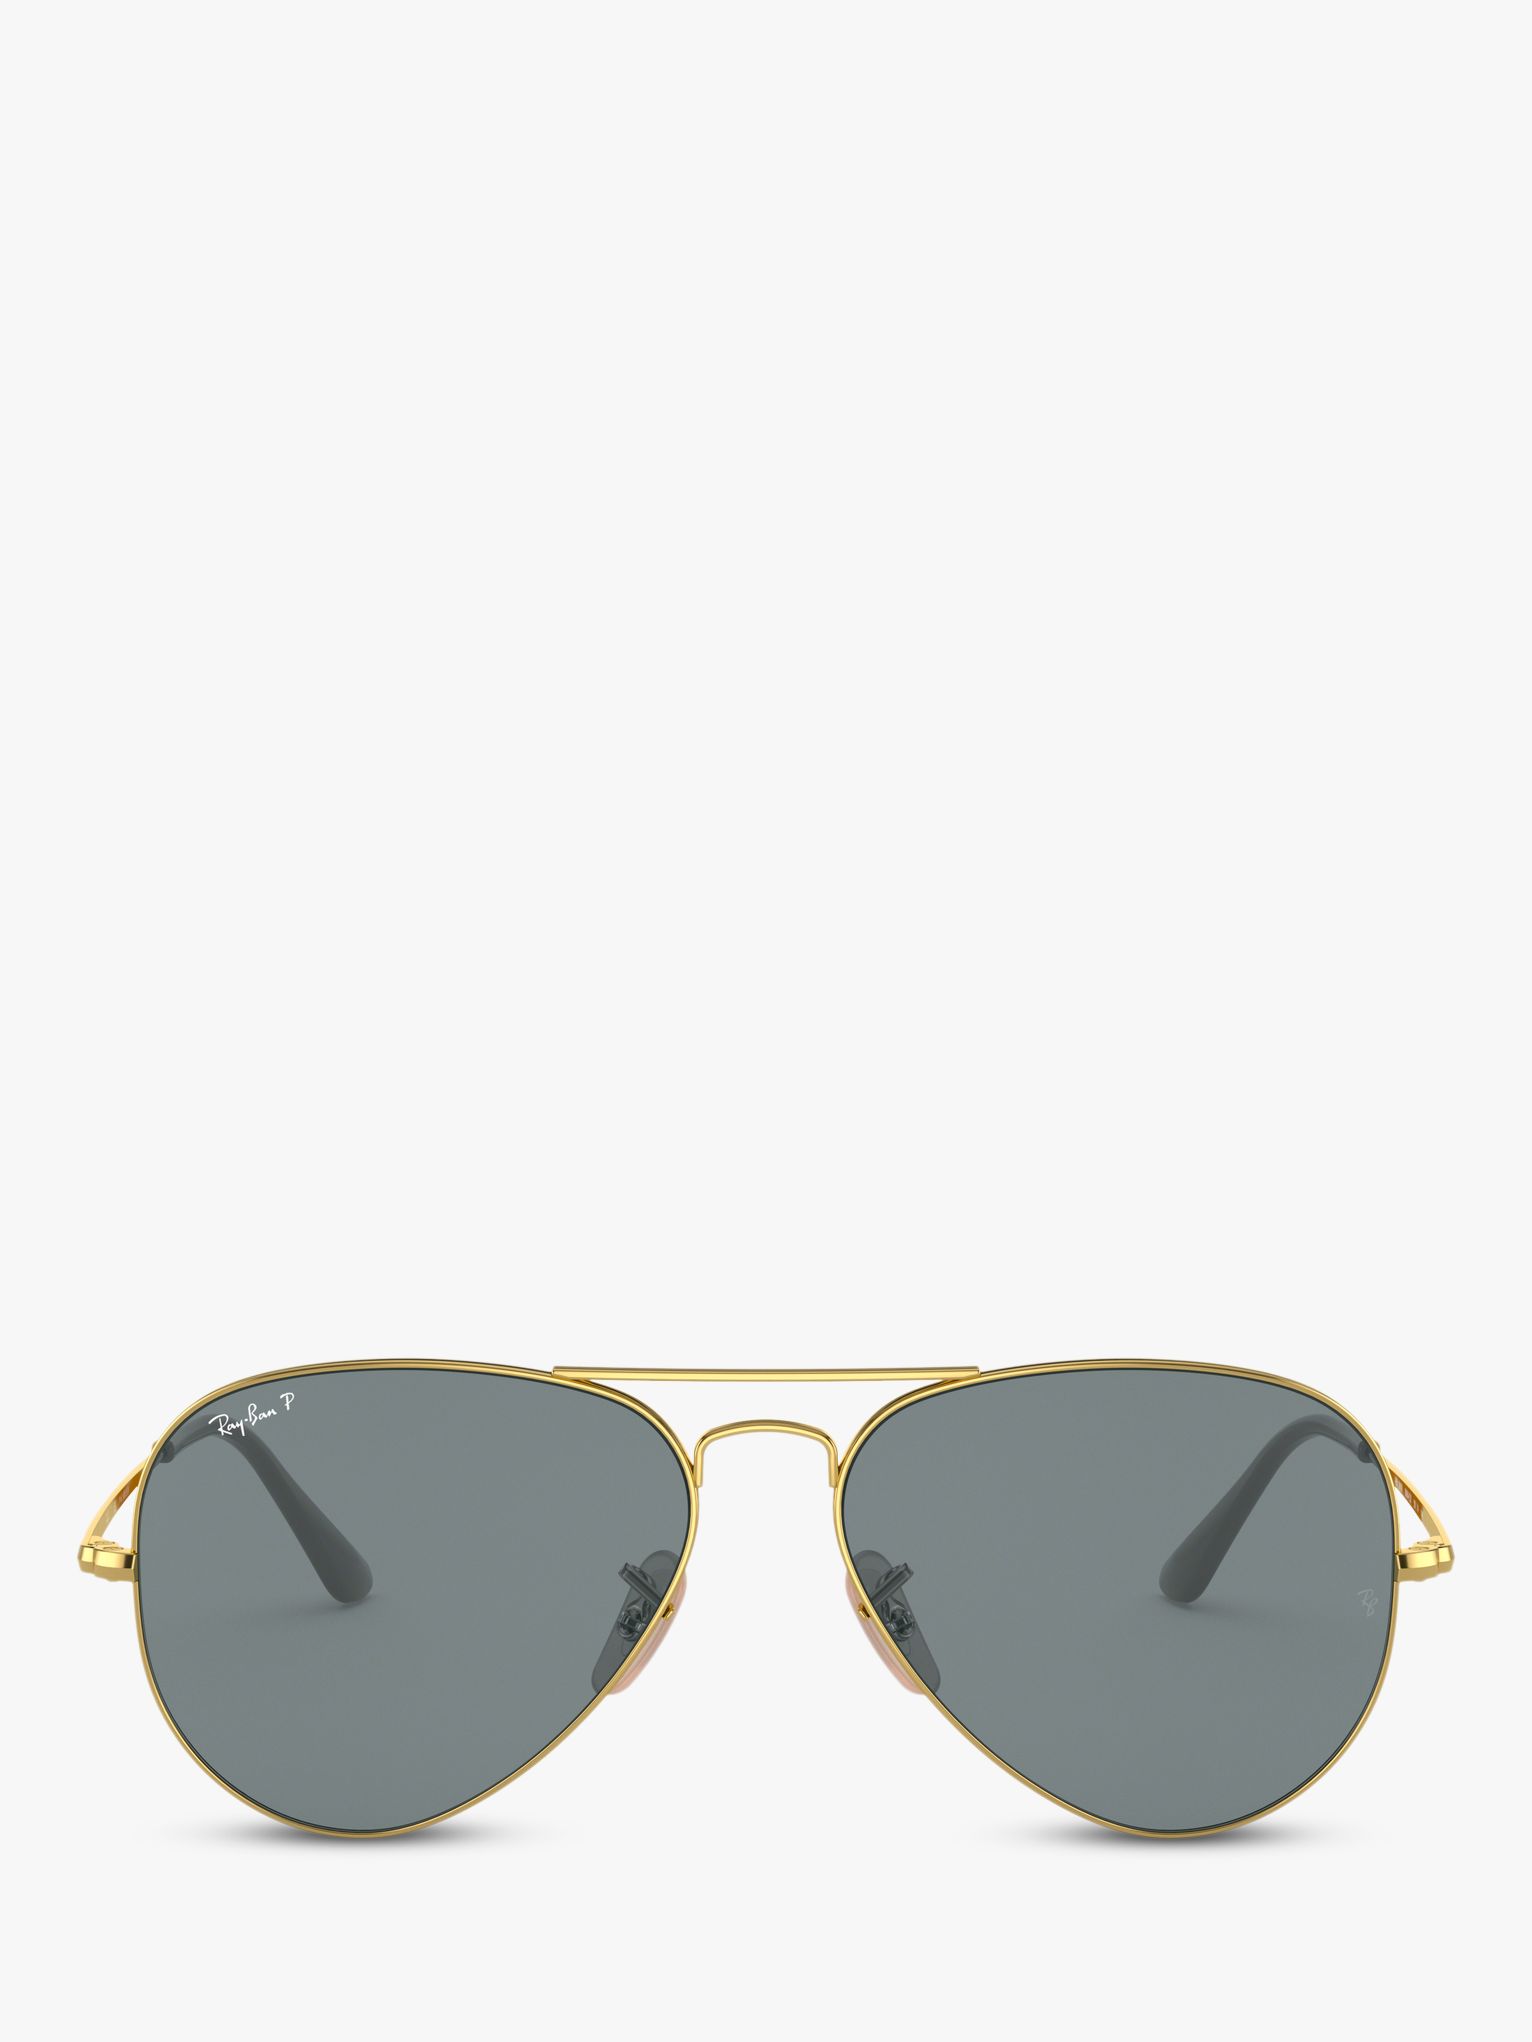 Ray-Ban RB3689 Unisex Polarised Aviator Sunglasses, Gold/Blue